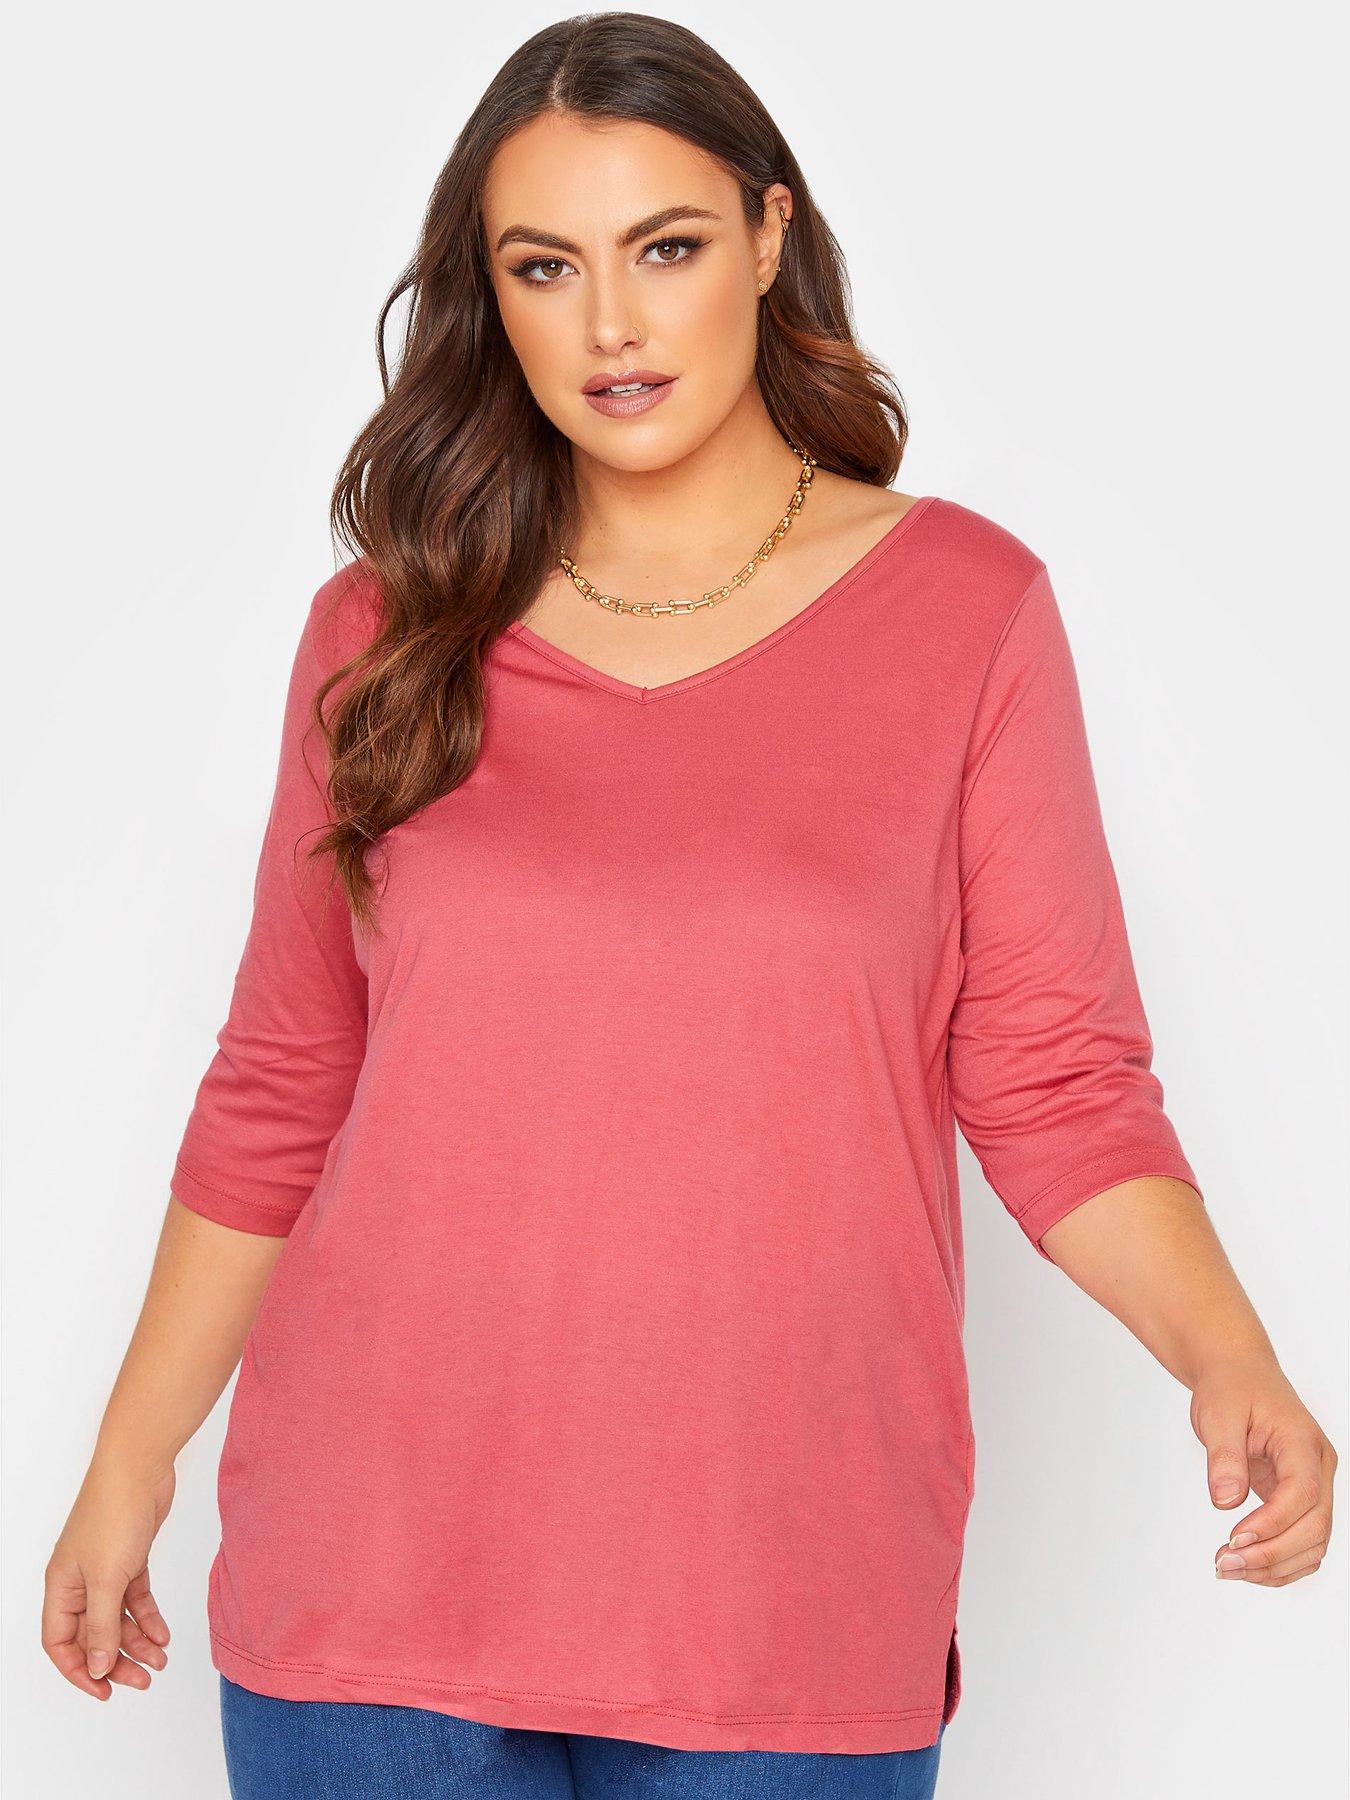 New Size 14-24 Black Short Sleeve T shirt Top Pink Coral Rose Print Ladies 